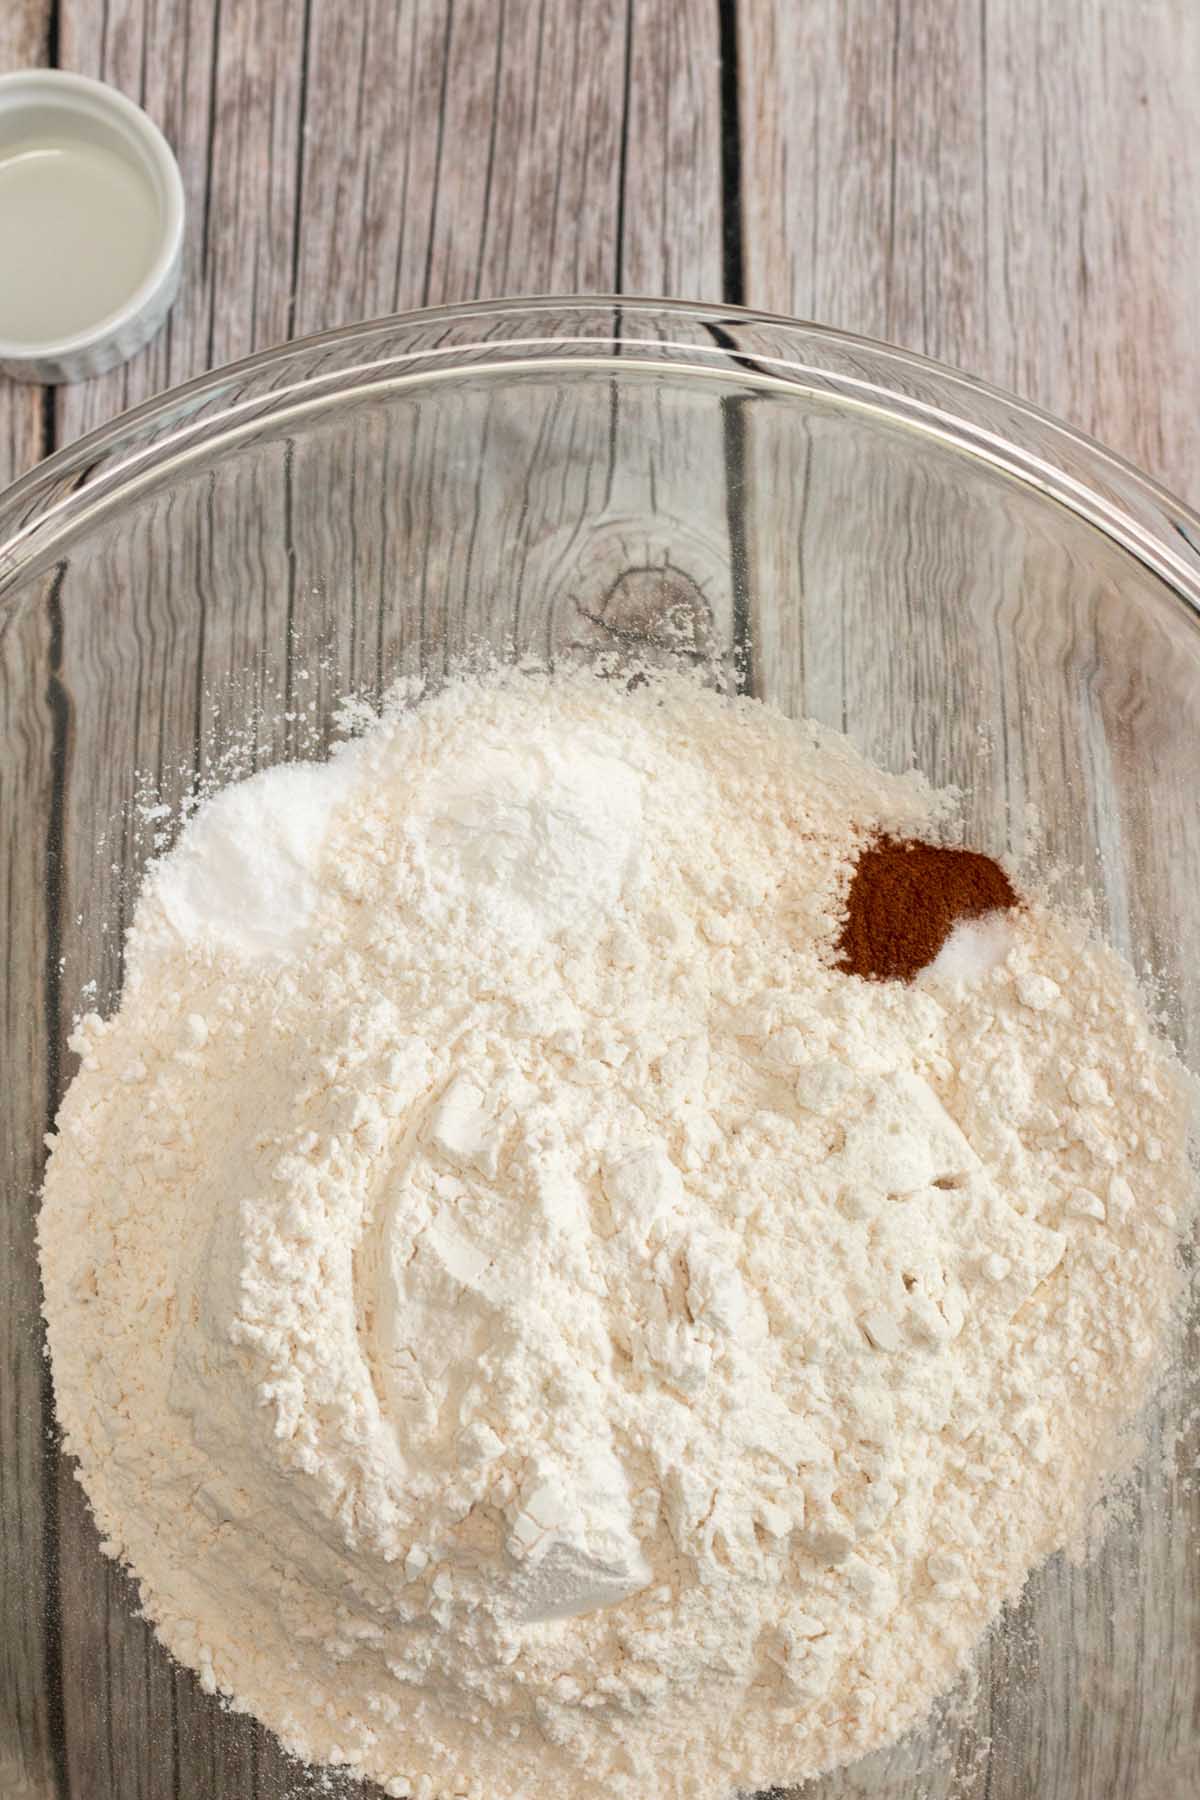 Cinnamon, baking soda, salt and baking powder in a mixing bowl.